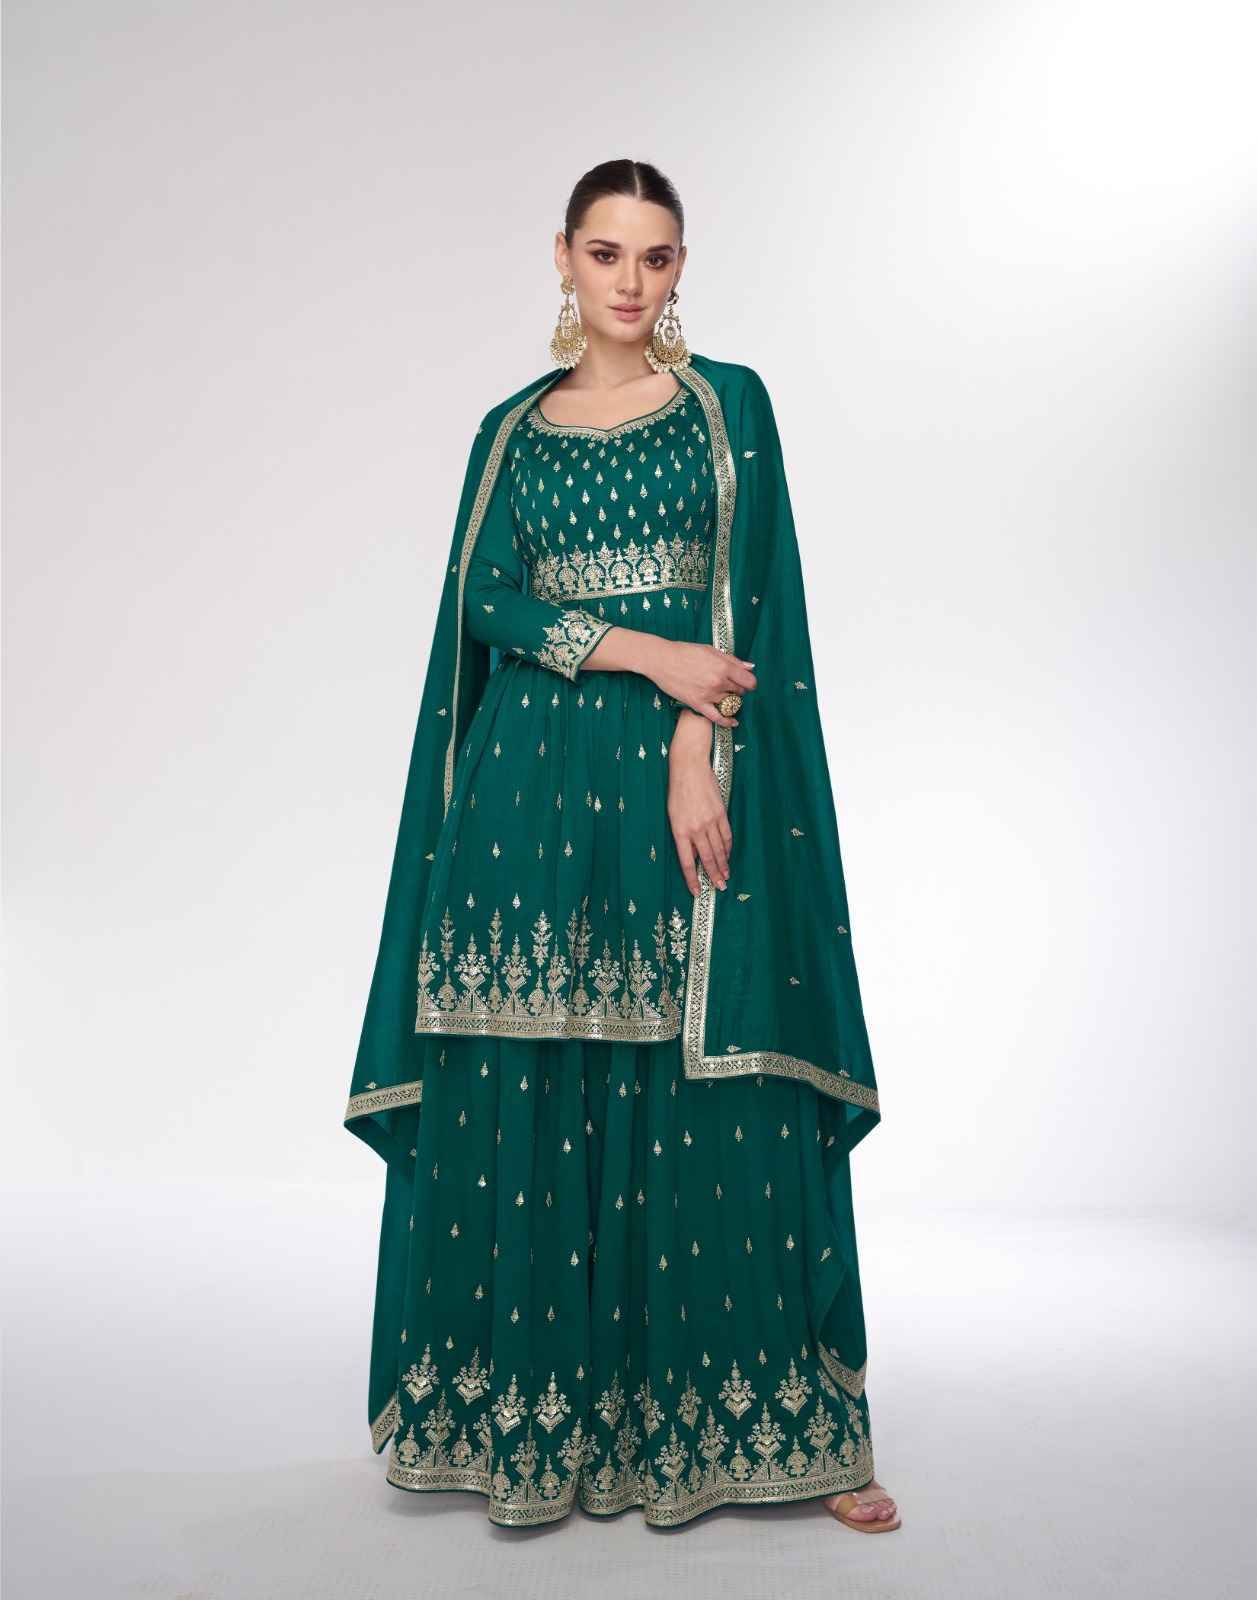 Sahira By Aashirwad Creation 9989 To 9991 Series Beautiful Sharara Suits Colorful Stylish Fancy Casual Wear & Ethnic Wear Premium Silk Dresses At Wholesale Price